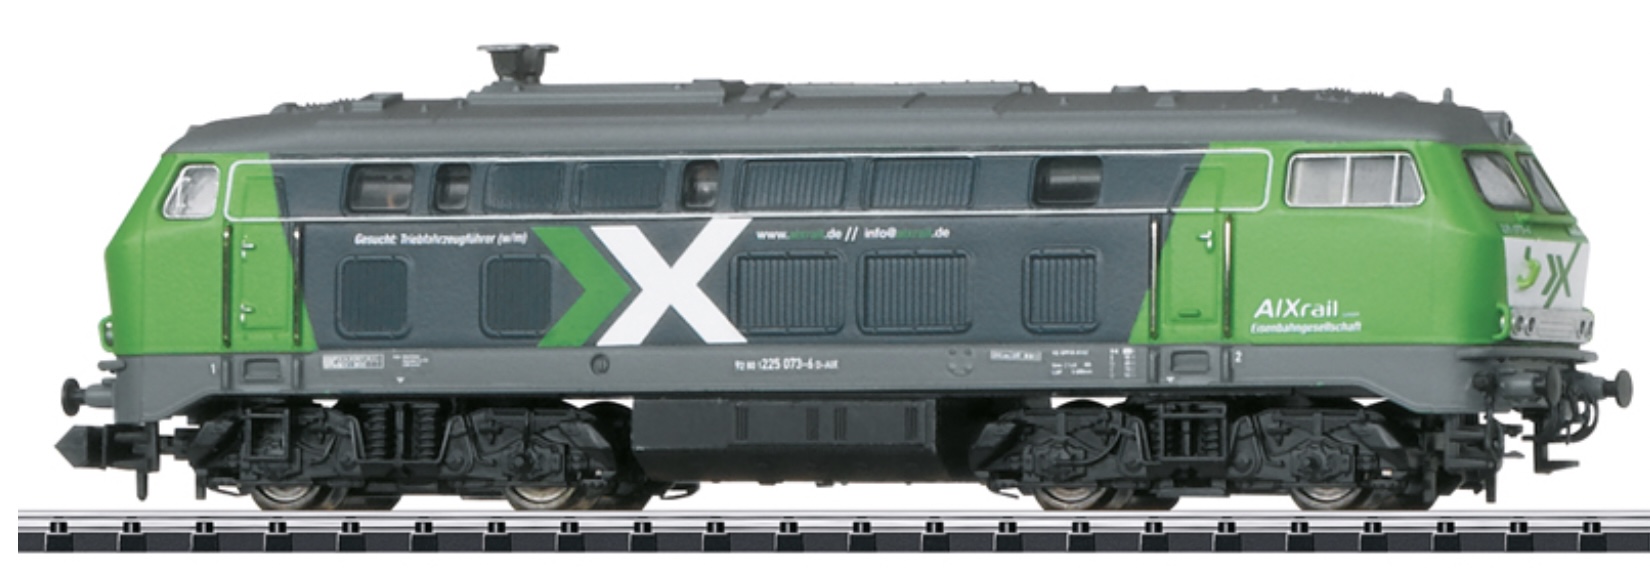 N Scale - Minitrix - 16253 - Locomotive, Diesel, Class 225, Epoch VI - Painted/Lettered - 225 073-6